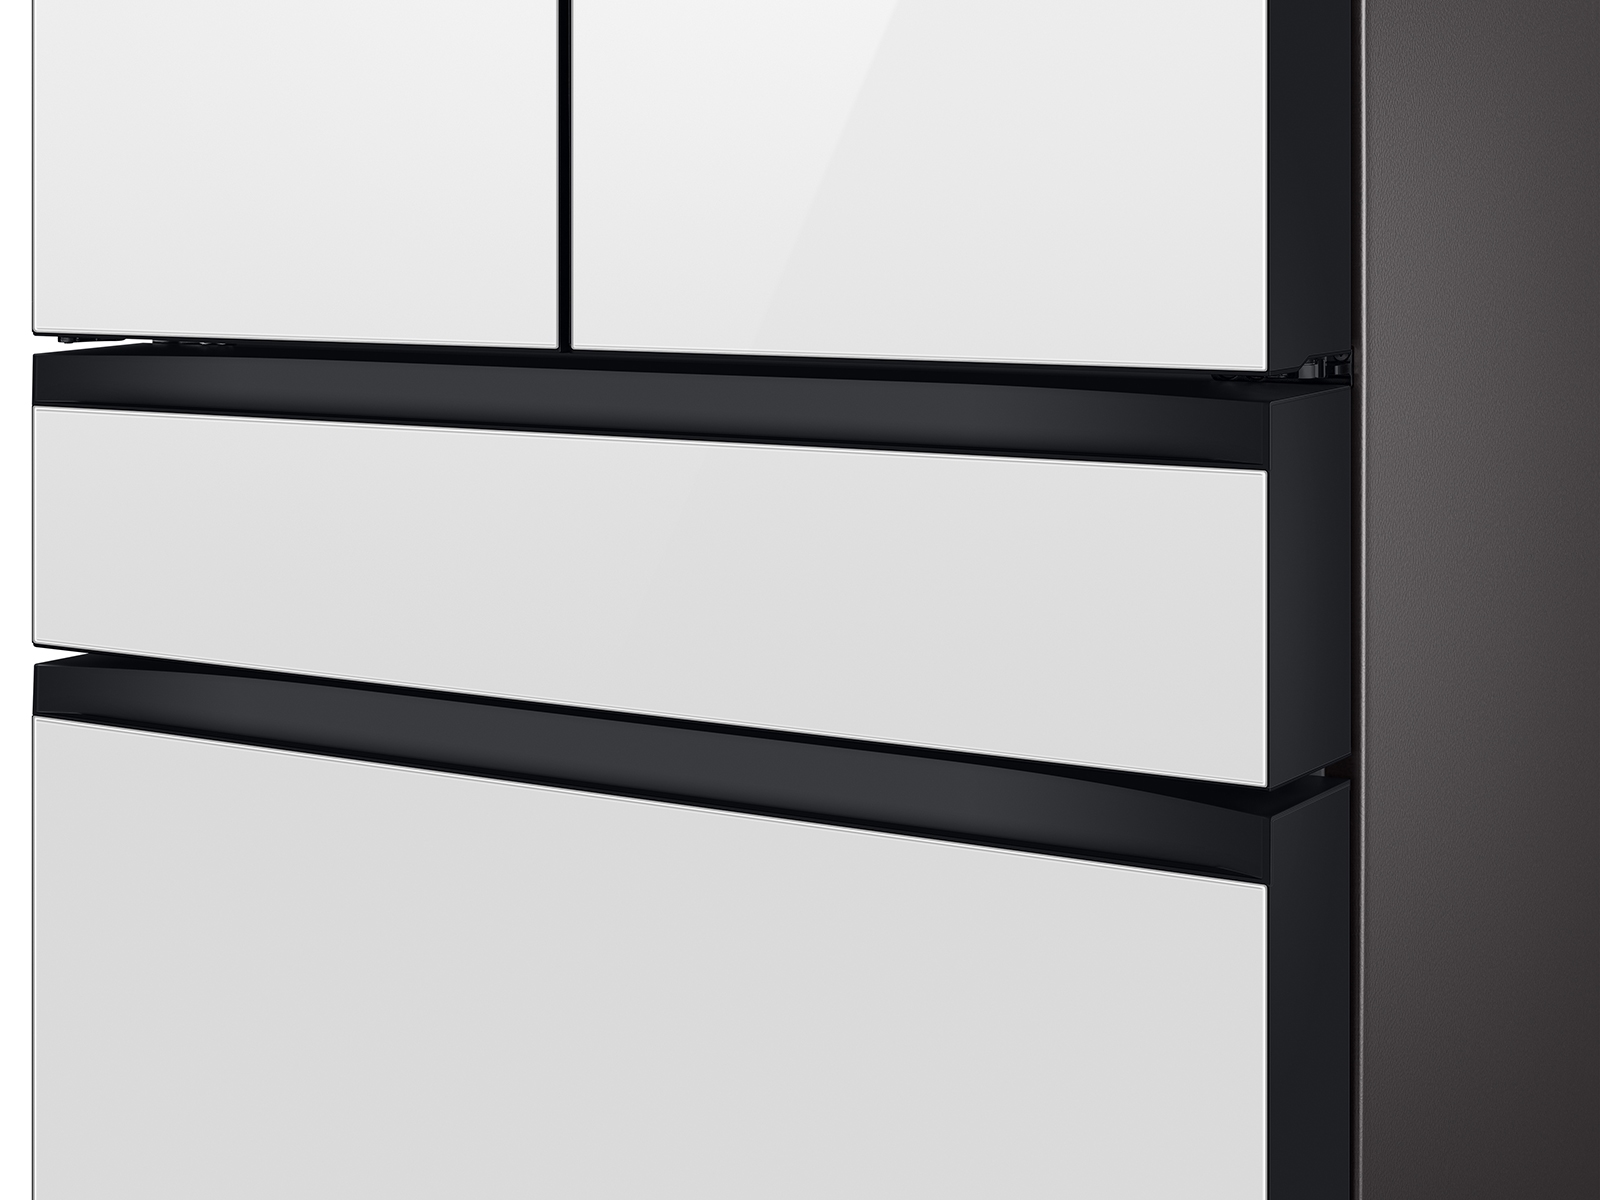 Samsung Electronics Announces First Bespoke French Door, Expanding Bespoke  Refrigerator Lineup – Samsung Global Newsroom